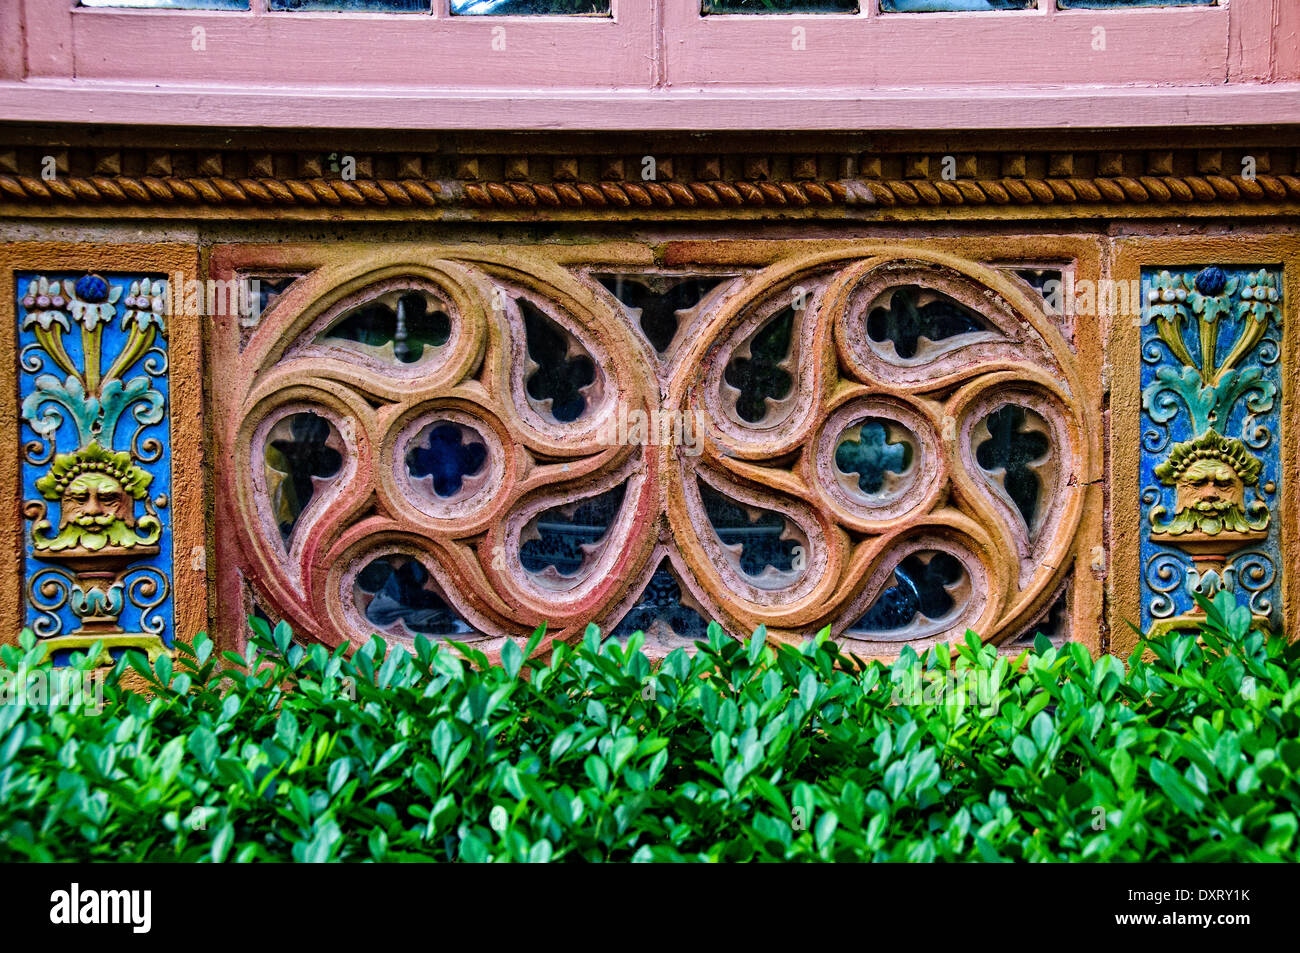 Reich verzierte Fenster, Ca' d'Zan Mansion, Ringling Museum, Sarasota, Florida Stockfoto